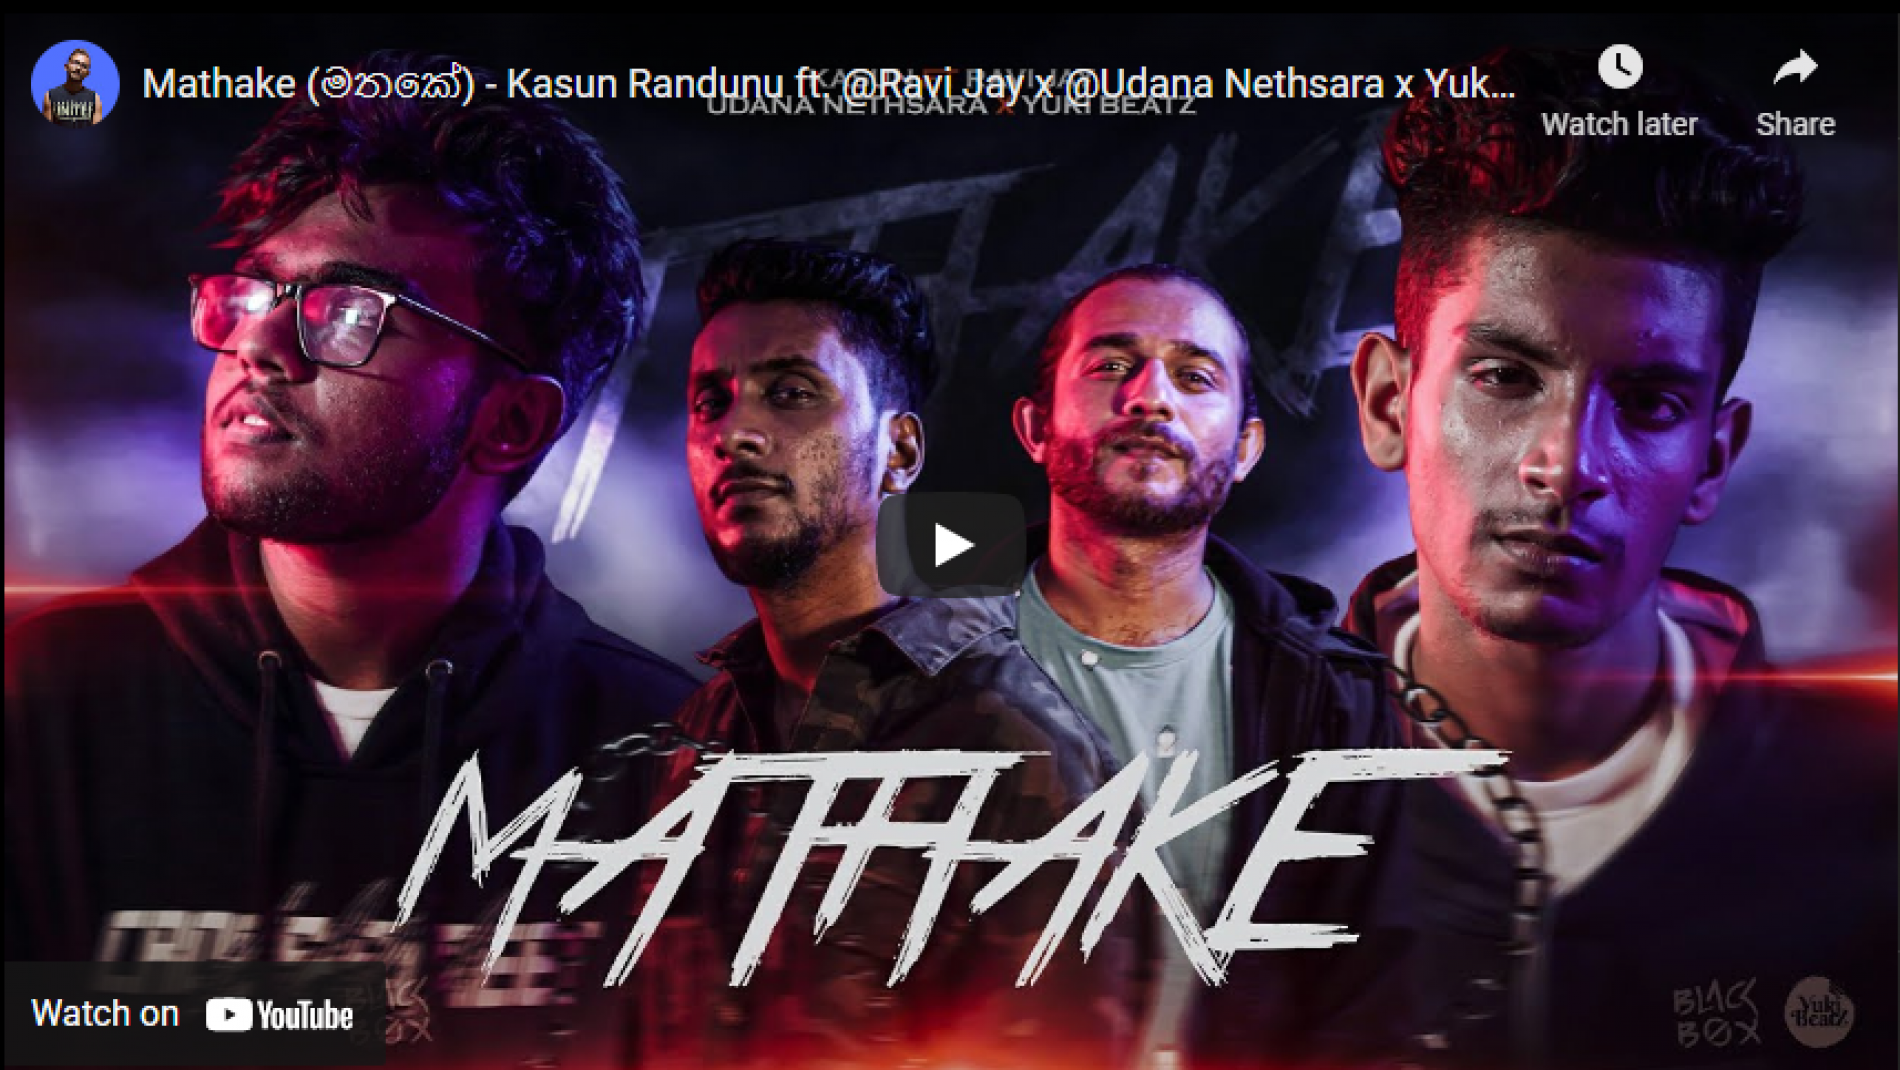 New Music : Mathake (මතකේ) – Kasun Randunu ft @Ravi Jay x @Udana Nethsara x Yuki [Official Music Video]